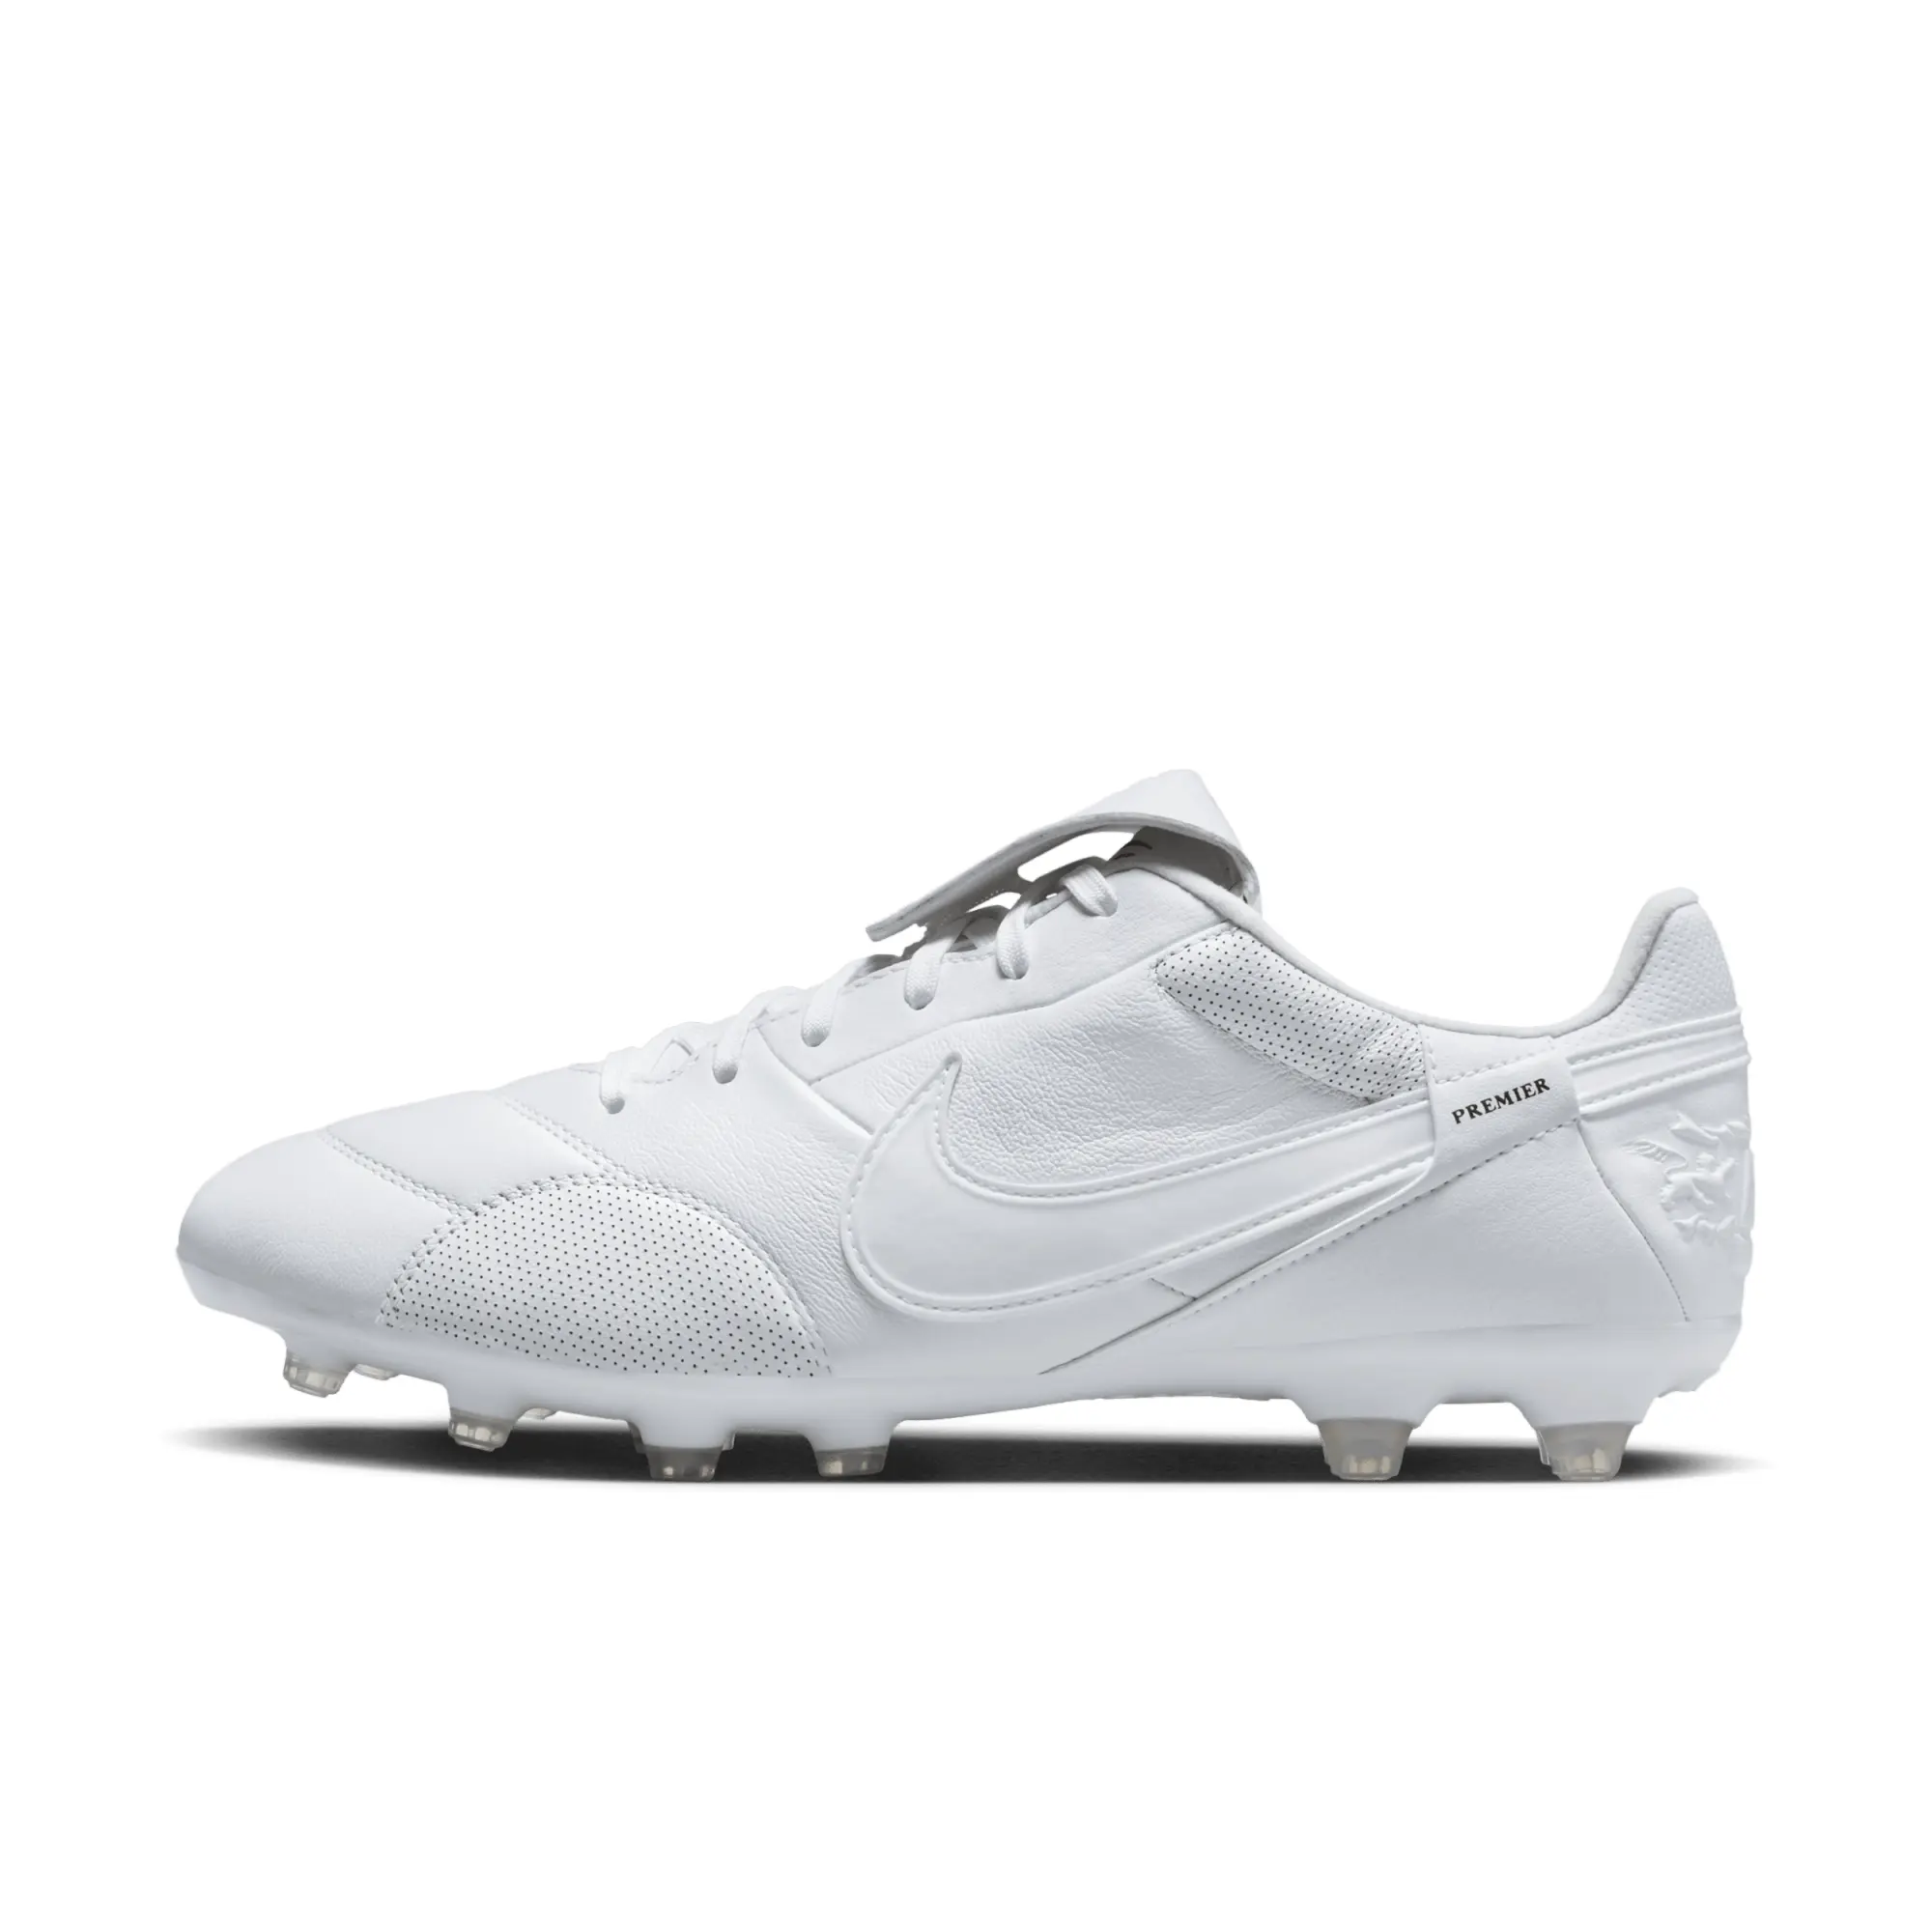 NikePremier 3 Firm-Ground Football Boot - White